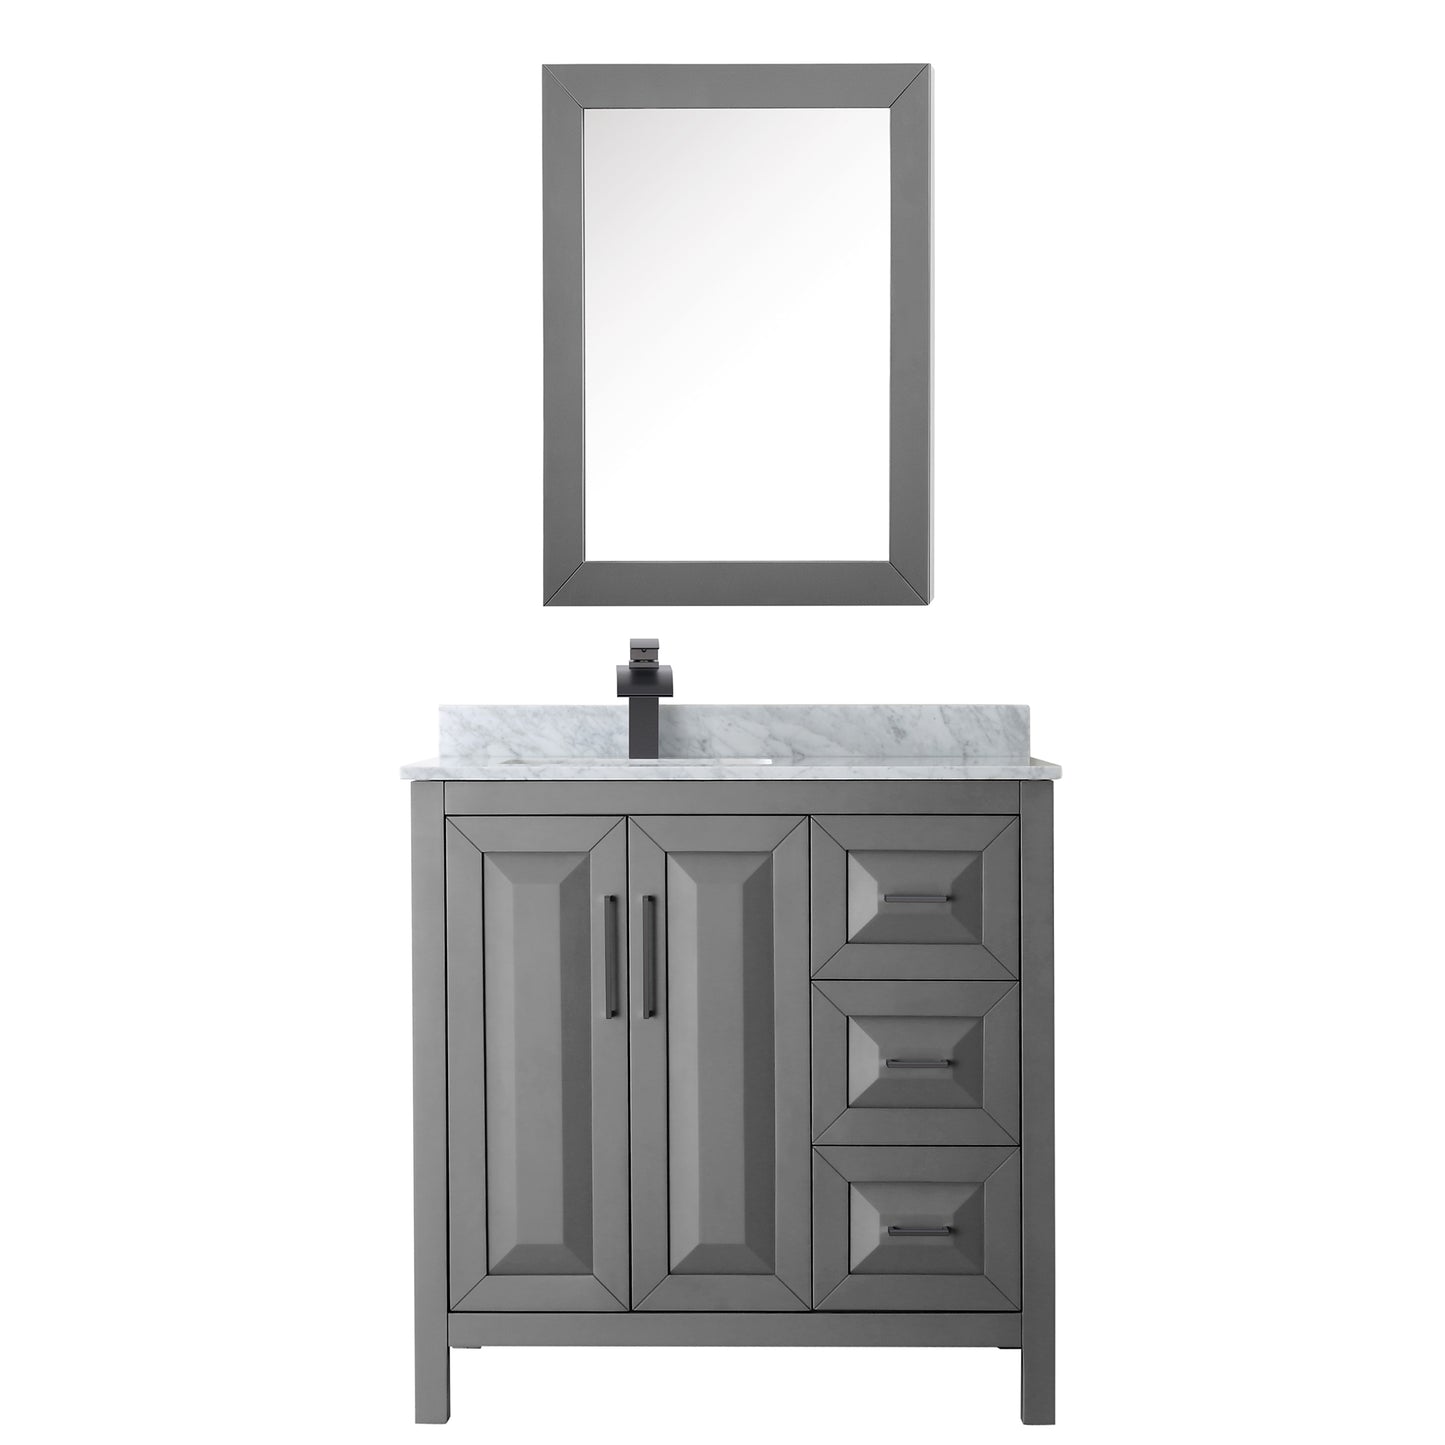 Wyndham Daria 36 Inch Single Bathroom Vanity White Carrara Marble Countertop, Undermount Square Sink in Matte Black Trim with Medicine Cabinet - Luxe Bathroom Vanities